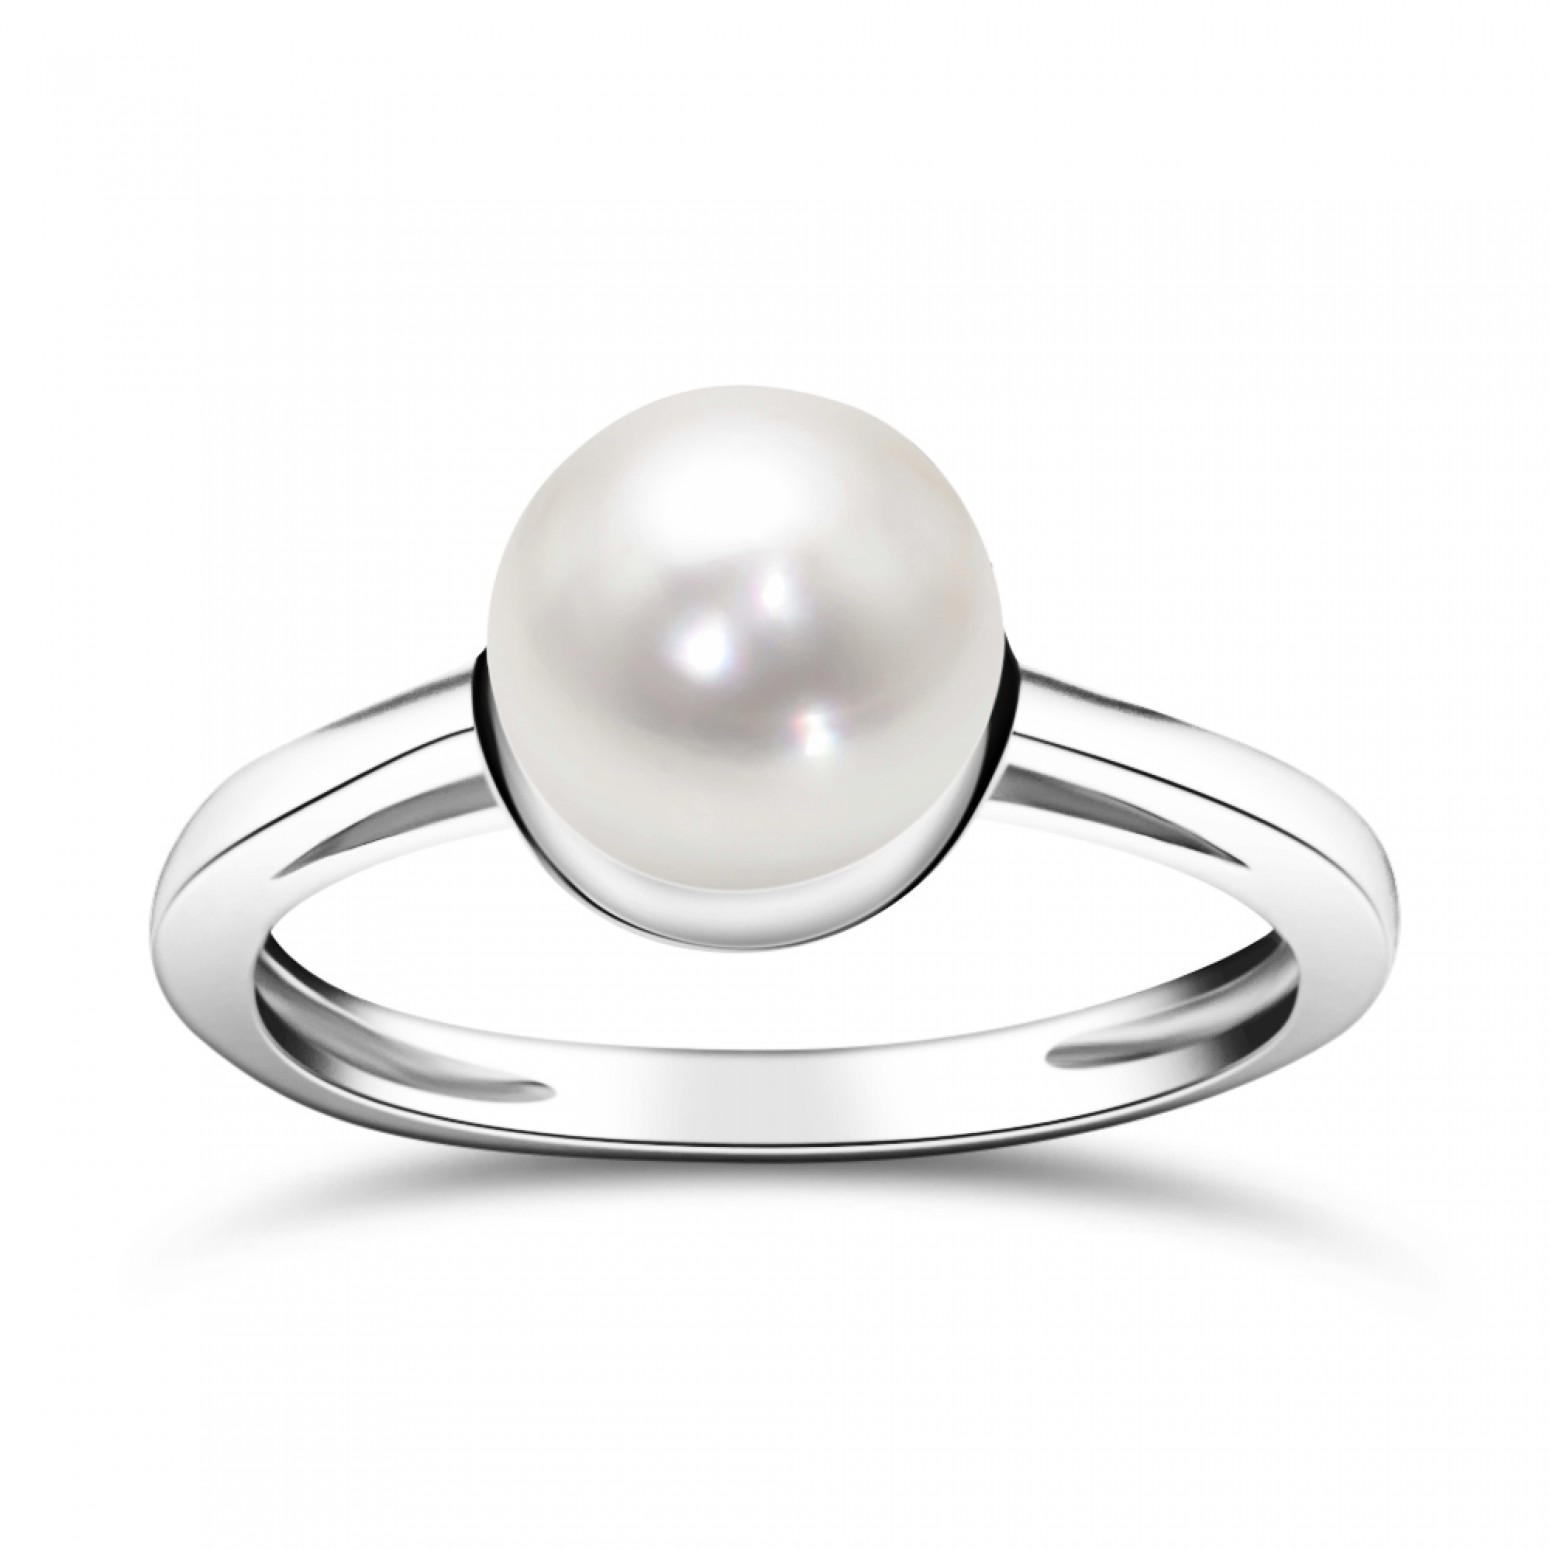 Ring 14K white gold with pearl, da4144 ENGAGEMENT RINGS Κοσμηματα - chrilia.gr